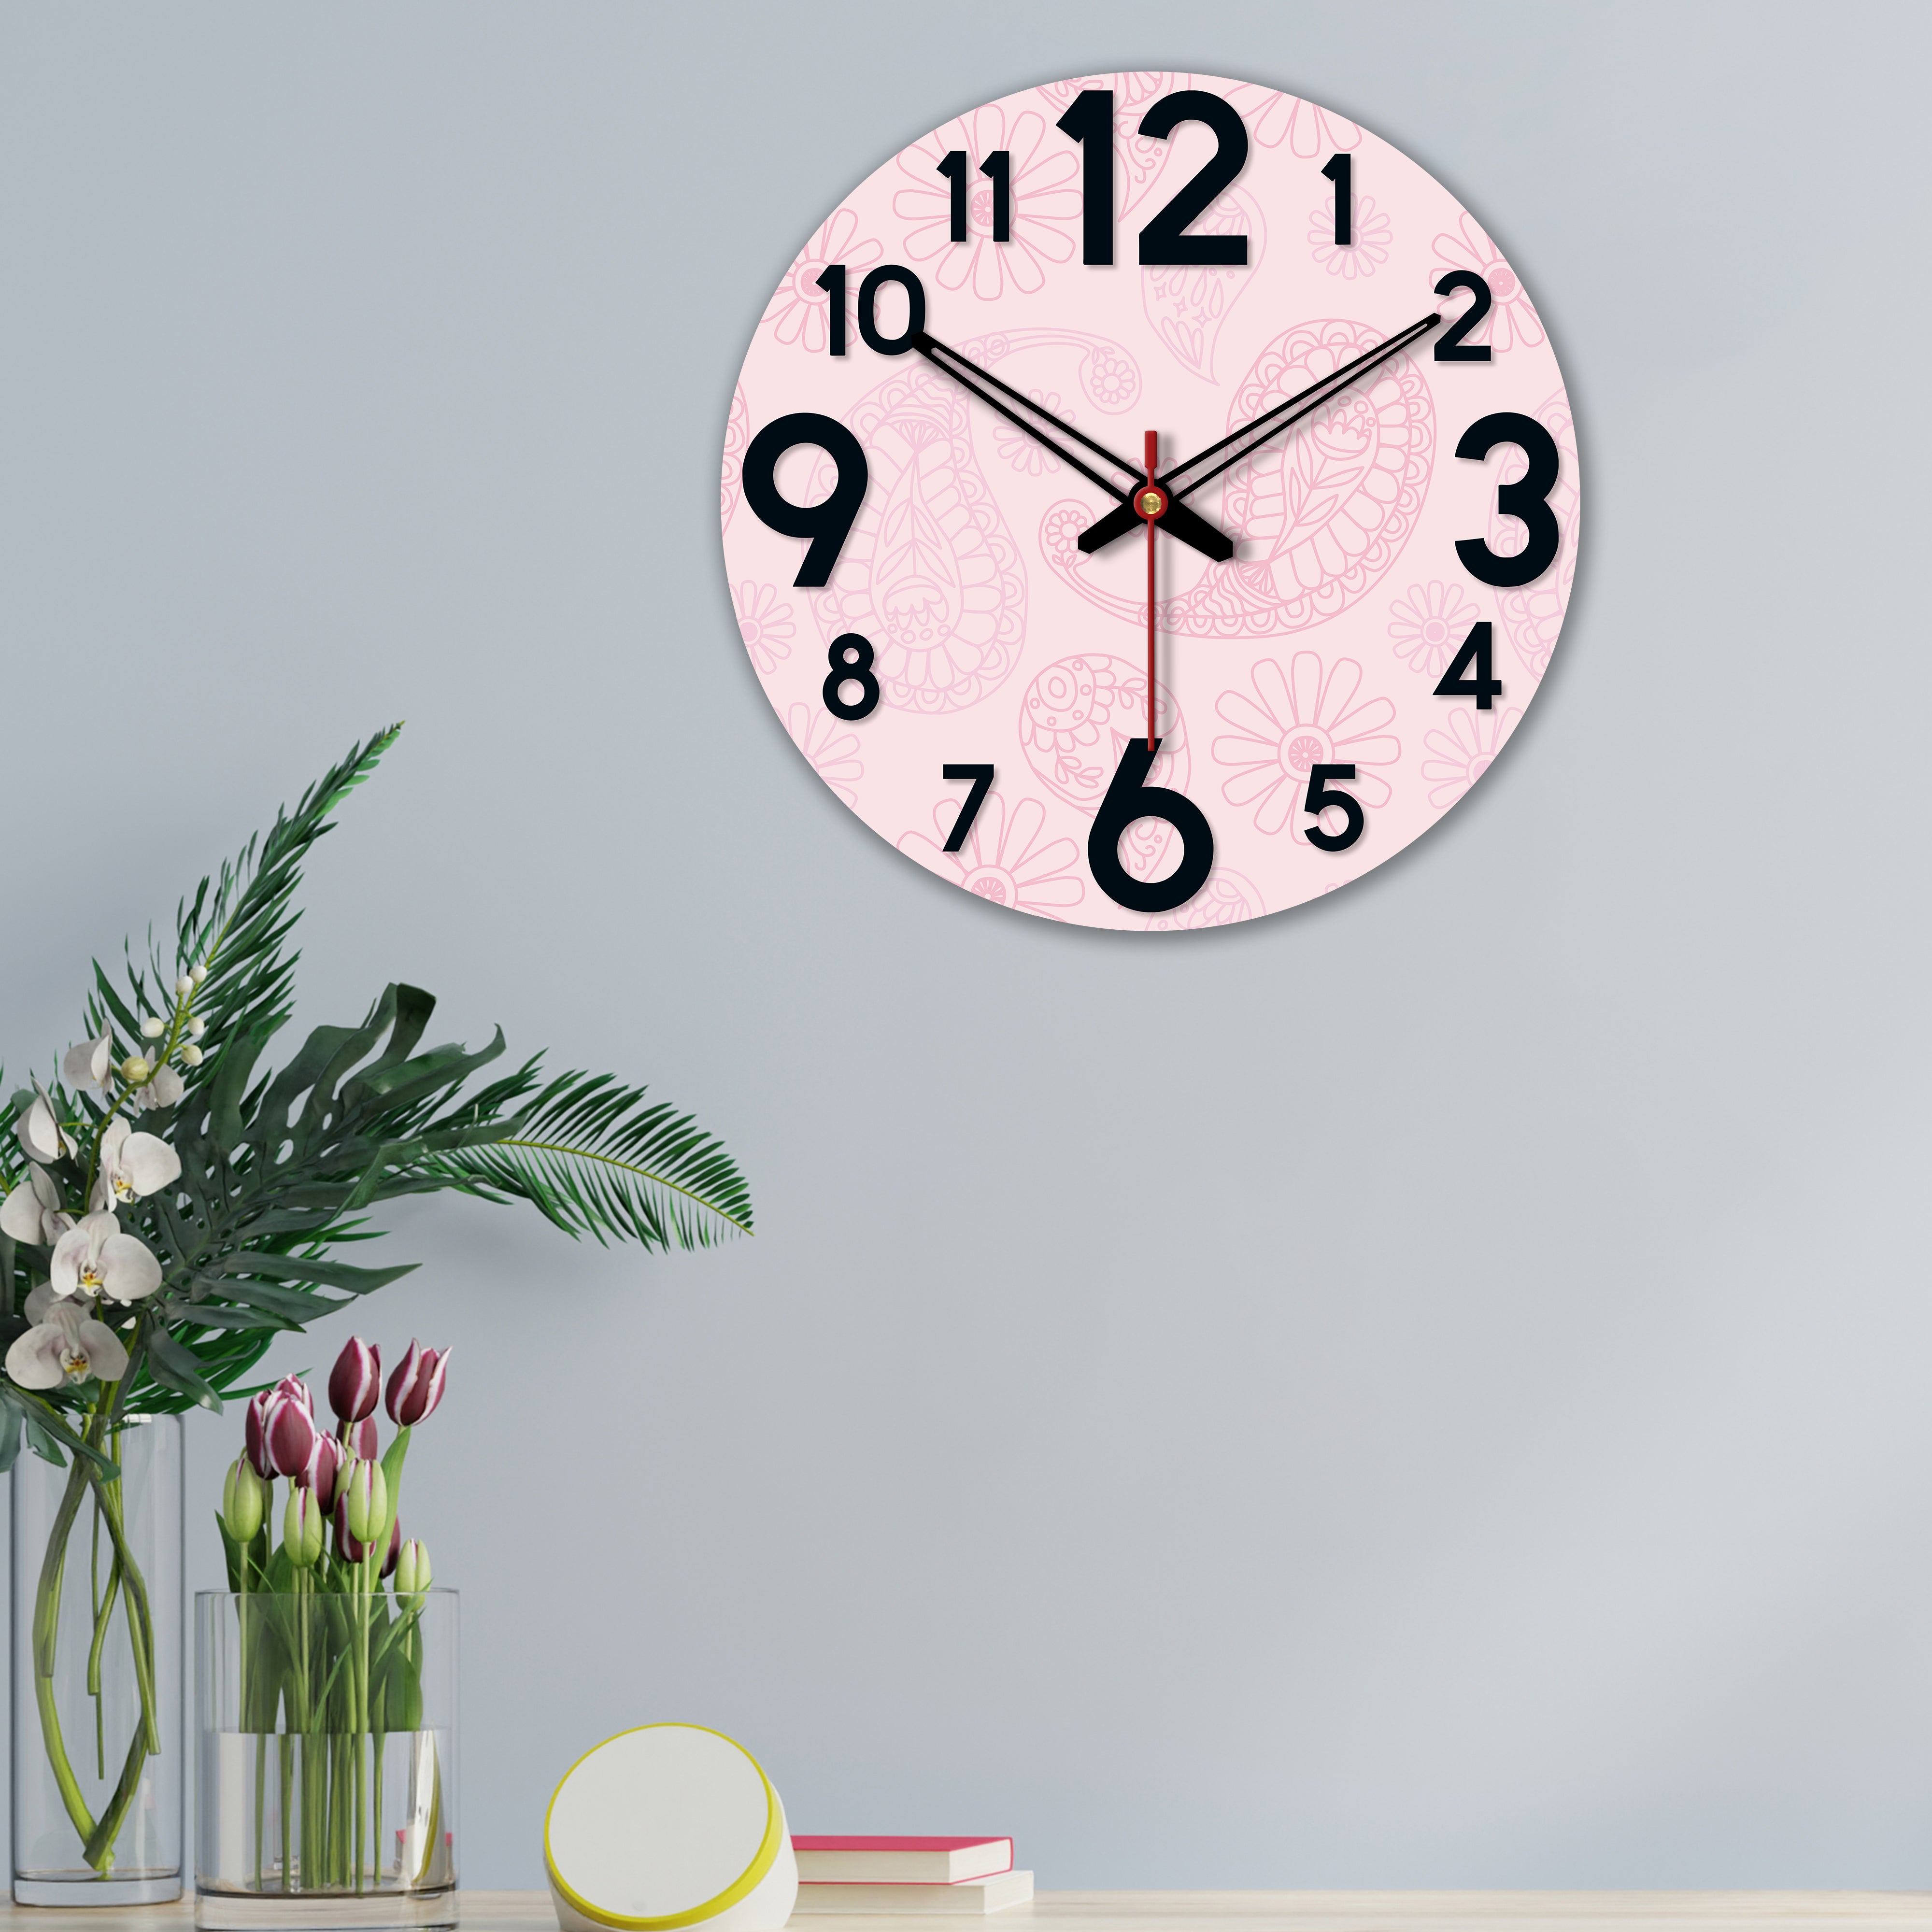 Paisley Pattern Wooden Wall Clock